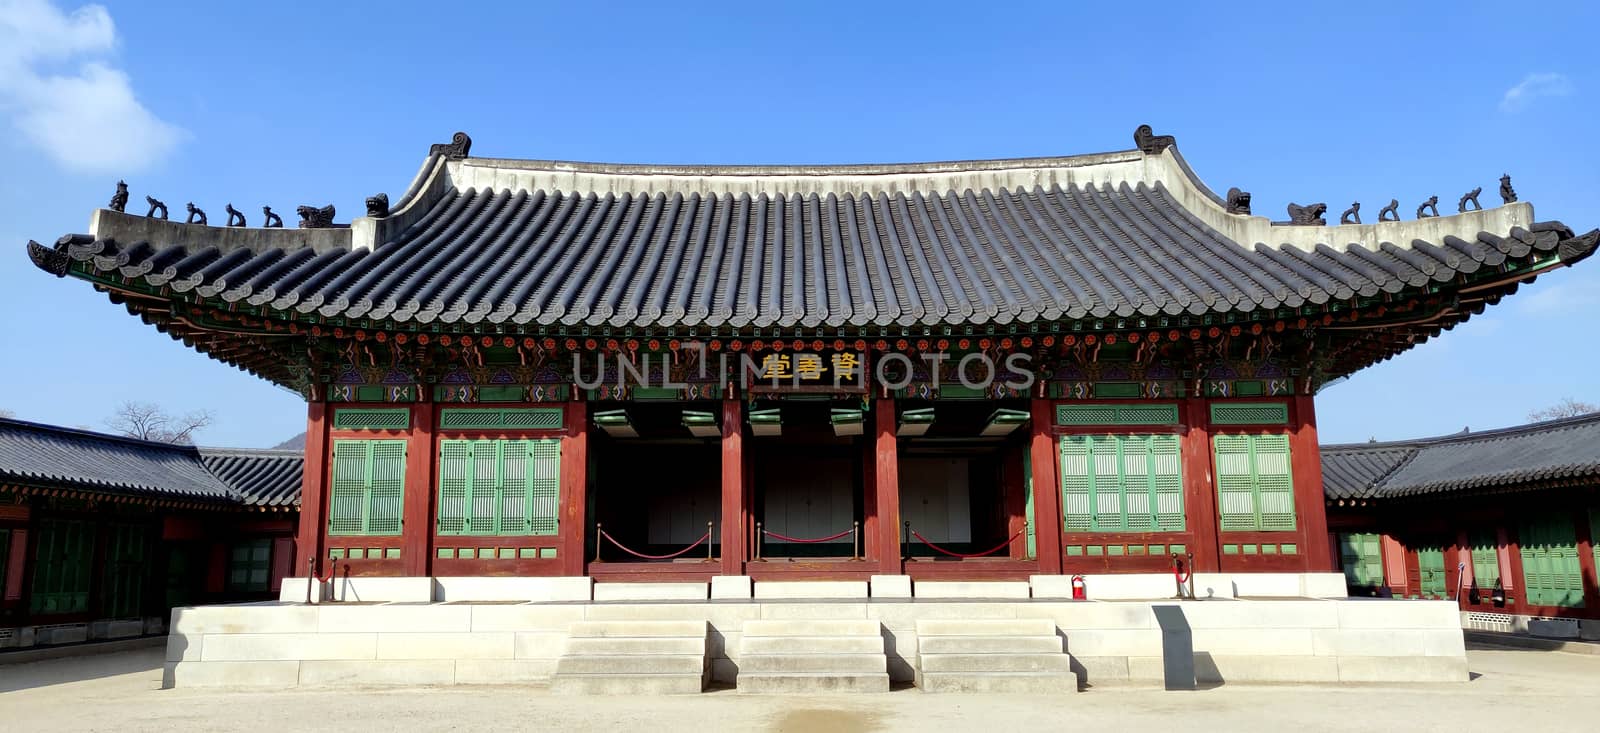 Insides of the ancient Gyeongbokgung Palace, Seoul, Korea by mshivangi92